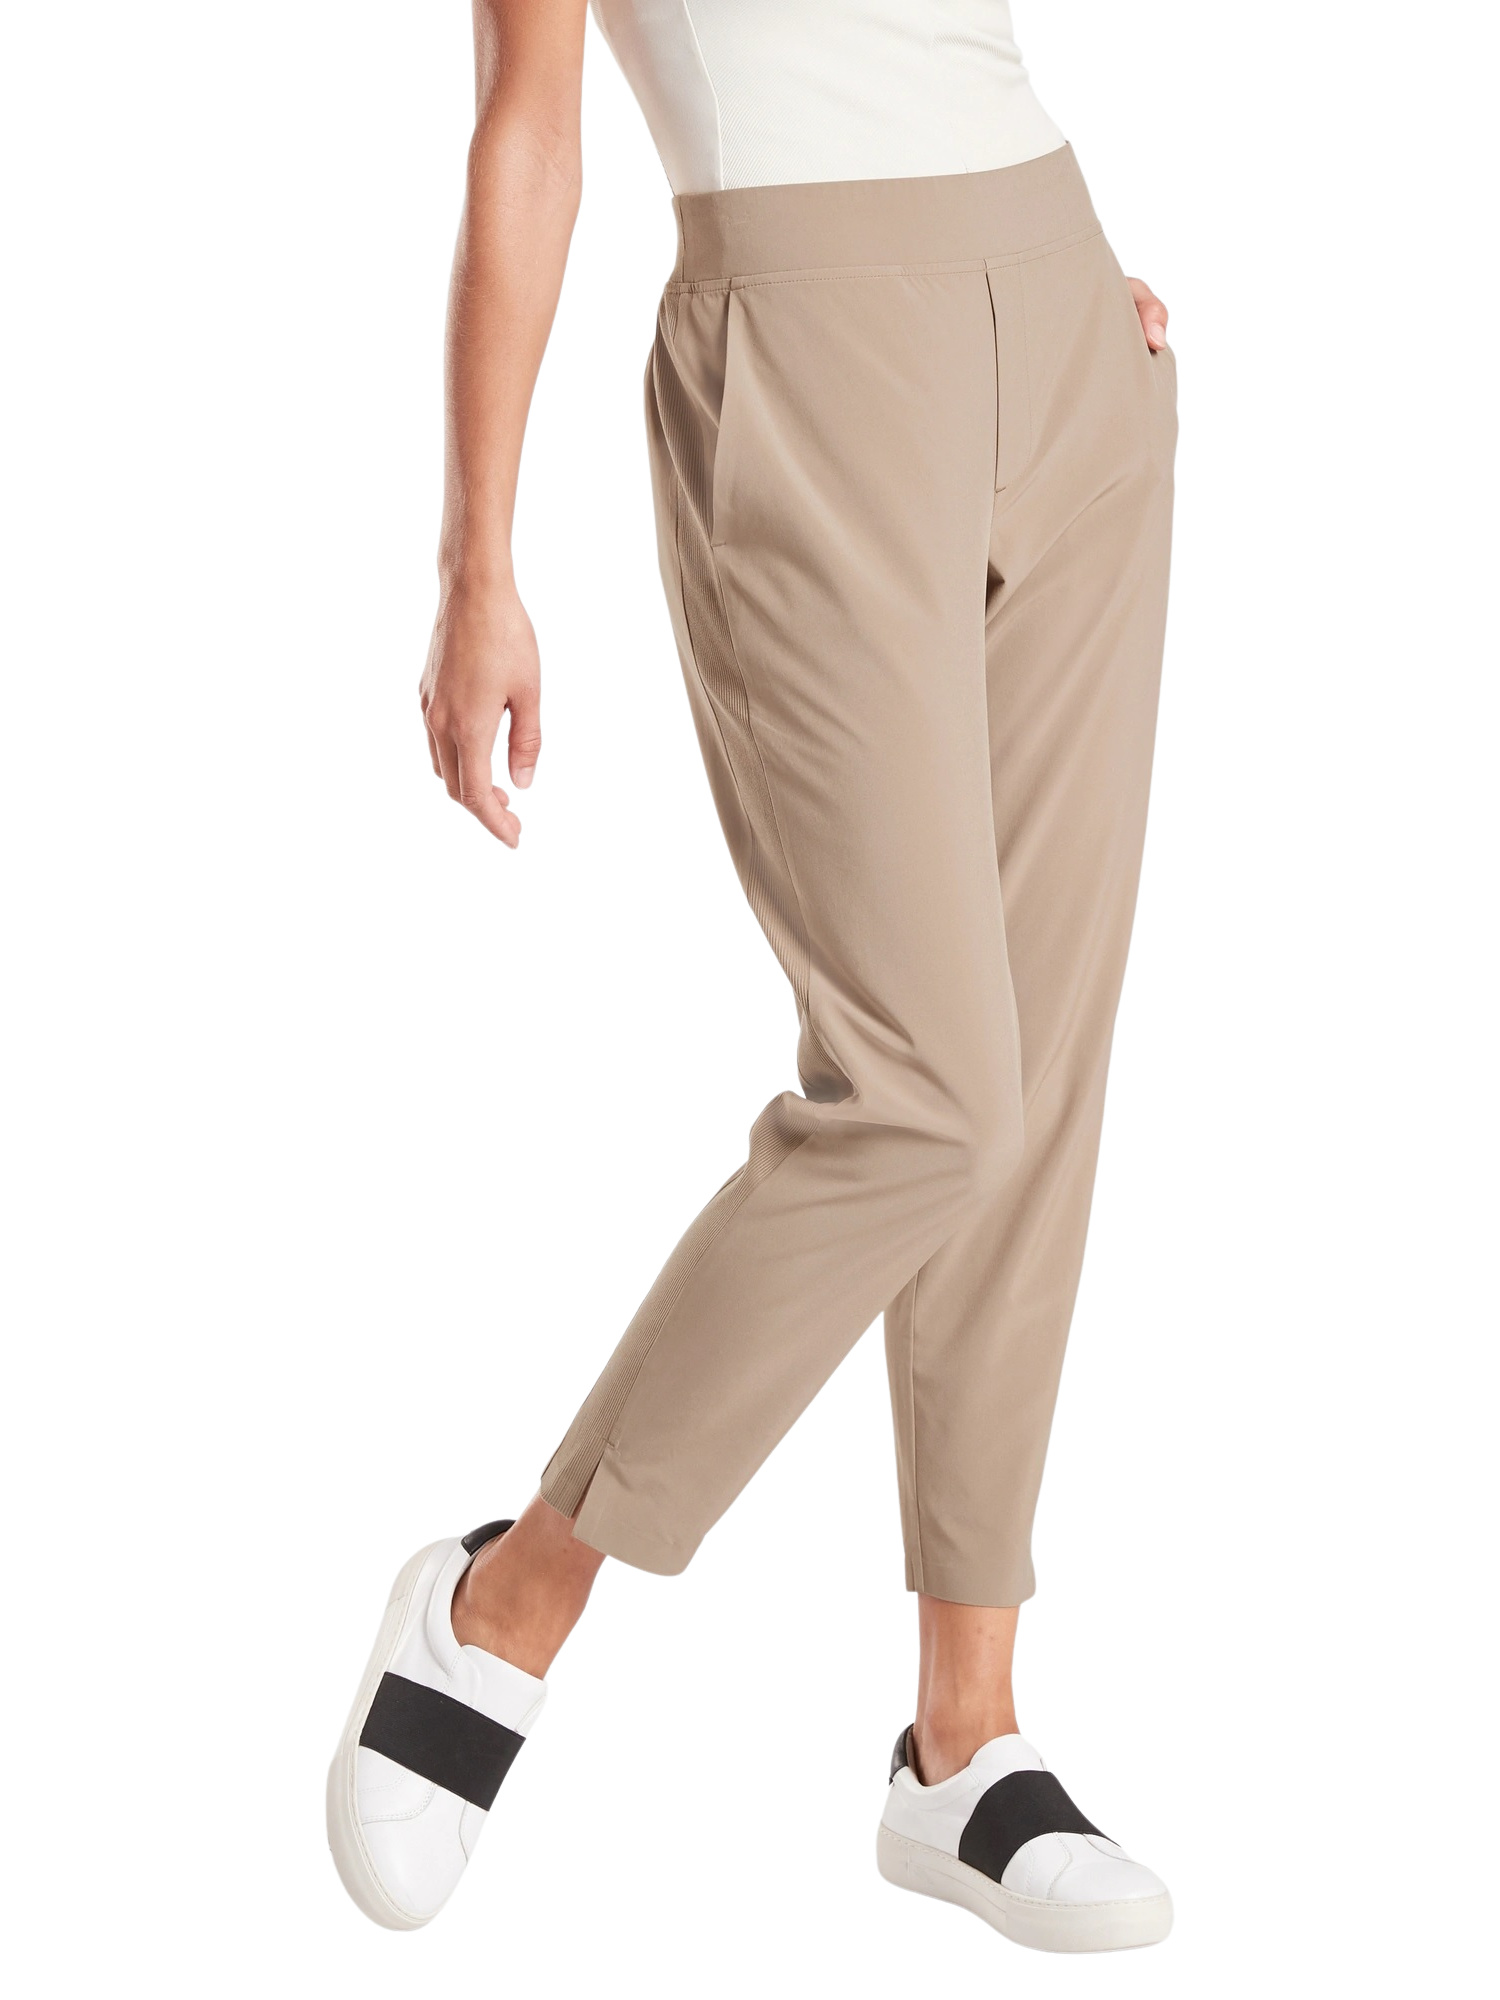 Brown 40                  EU WOMEN FASHION Trousers Slacks discount 90% Tex slacks 